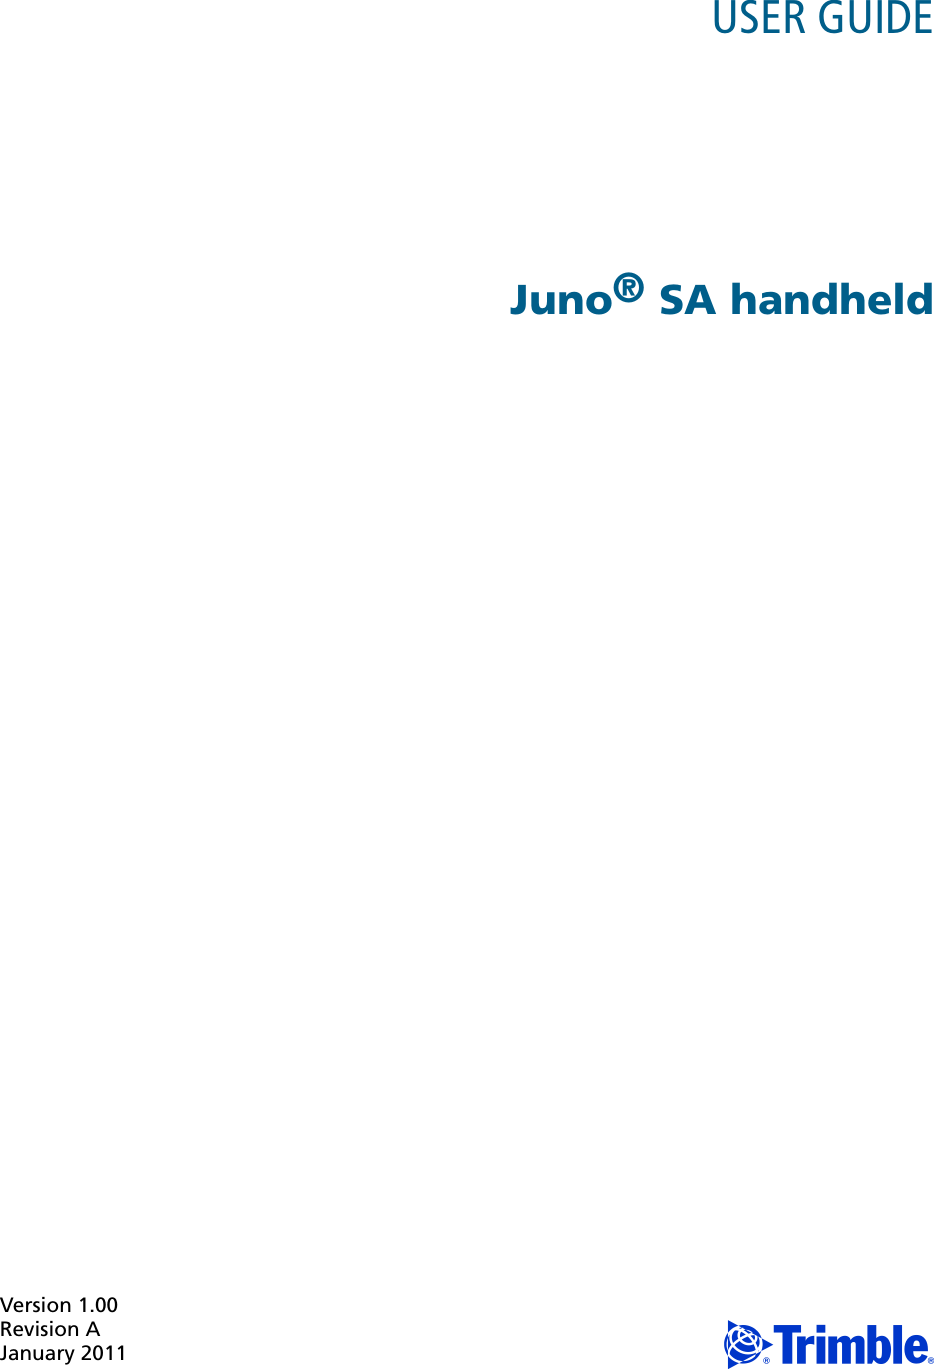 Version 1.00Revision AJanuary 2011 FUSER GUIDE Juno® SA handheld